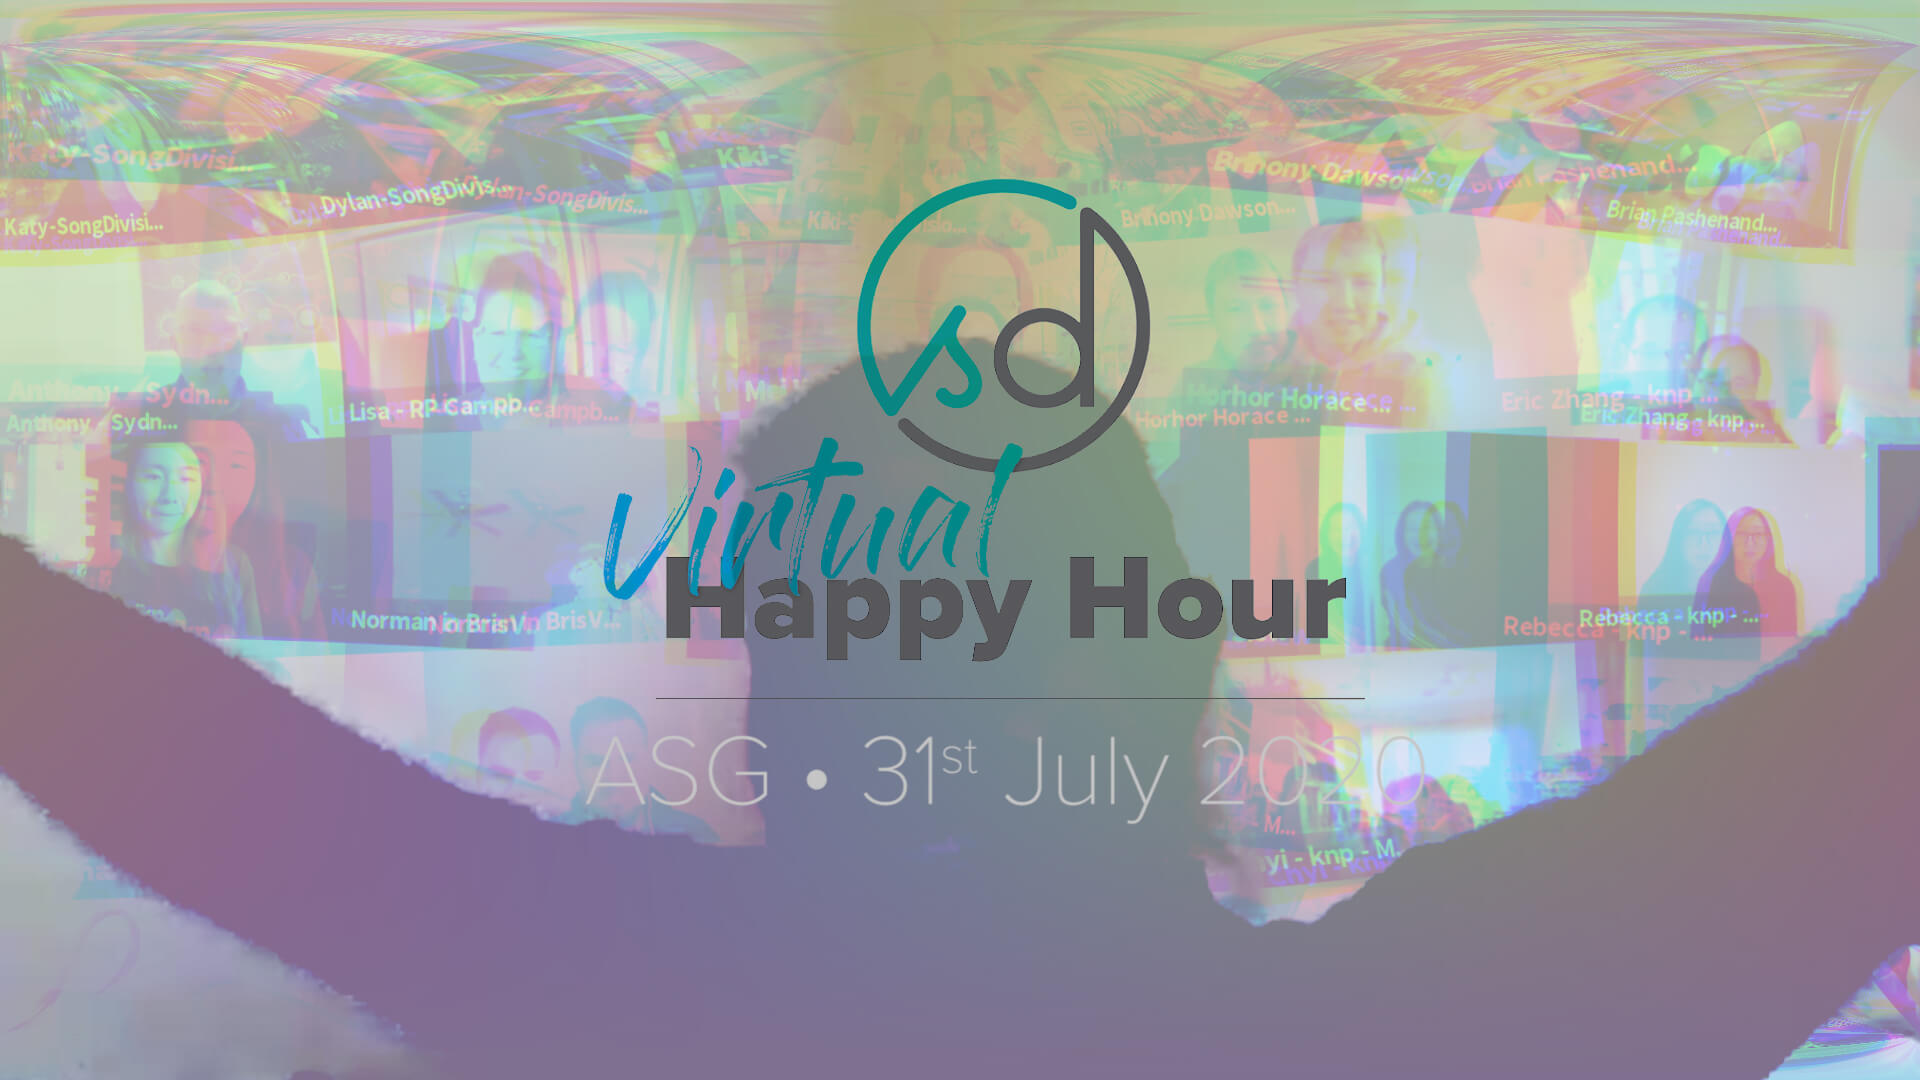 ASG + Virtual Happy Hour